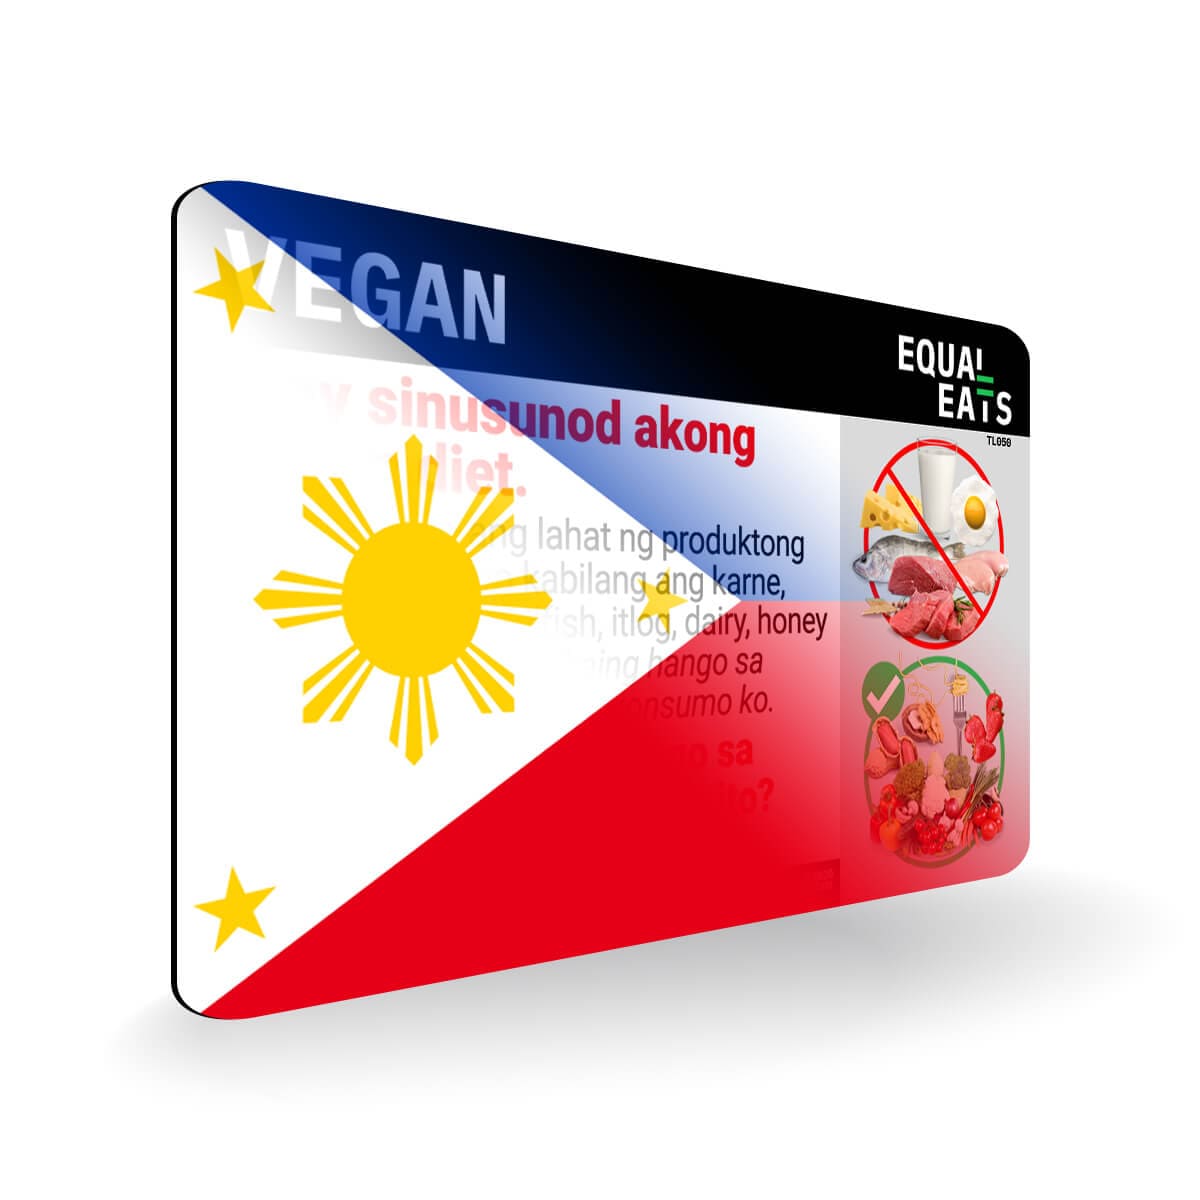 Vegan Diet in Tagalog. Vegan Card for Philippines